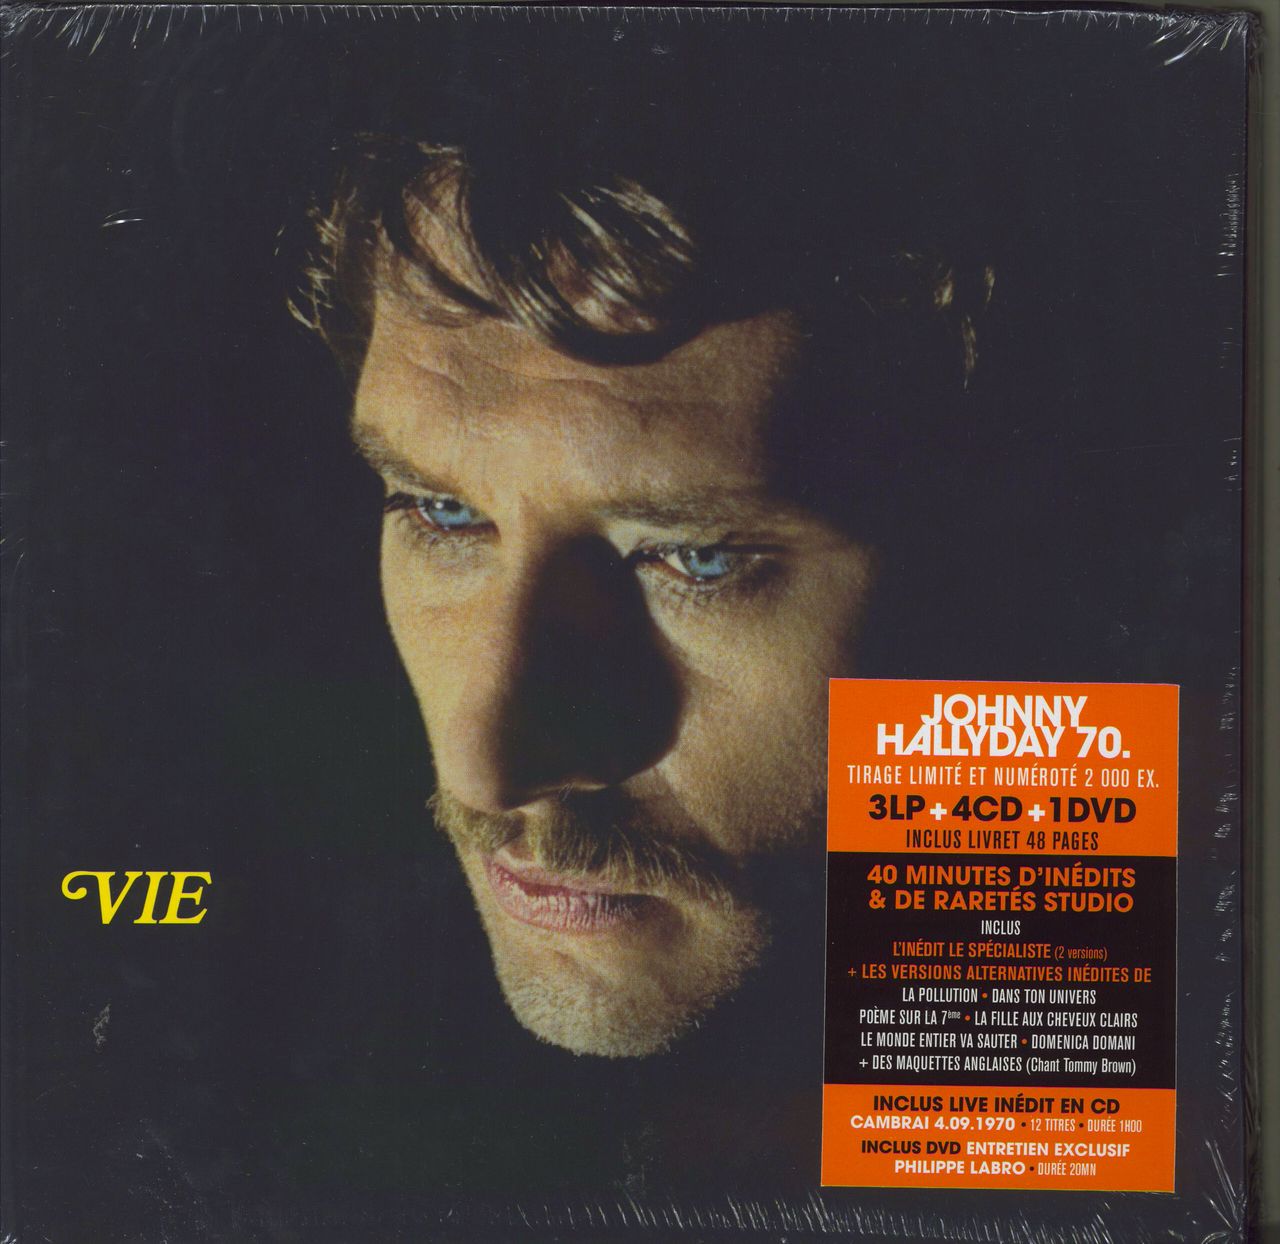 Johnny Hallyday - Performer (CD), Johnny Hallyday, Musique